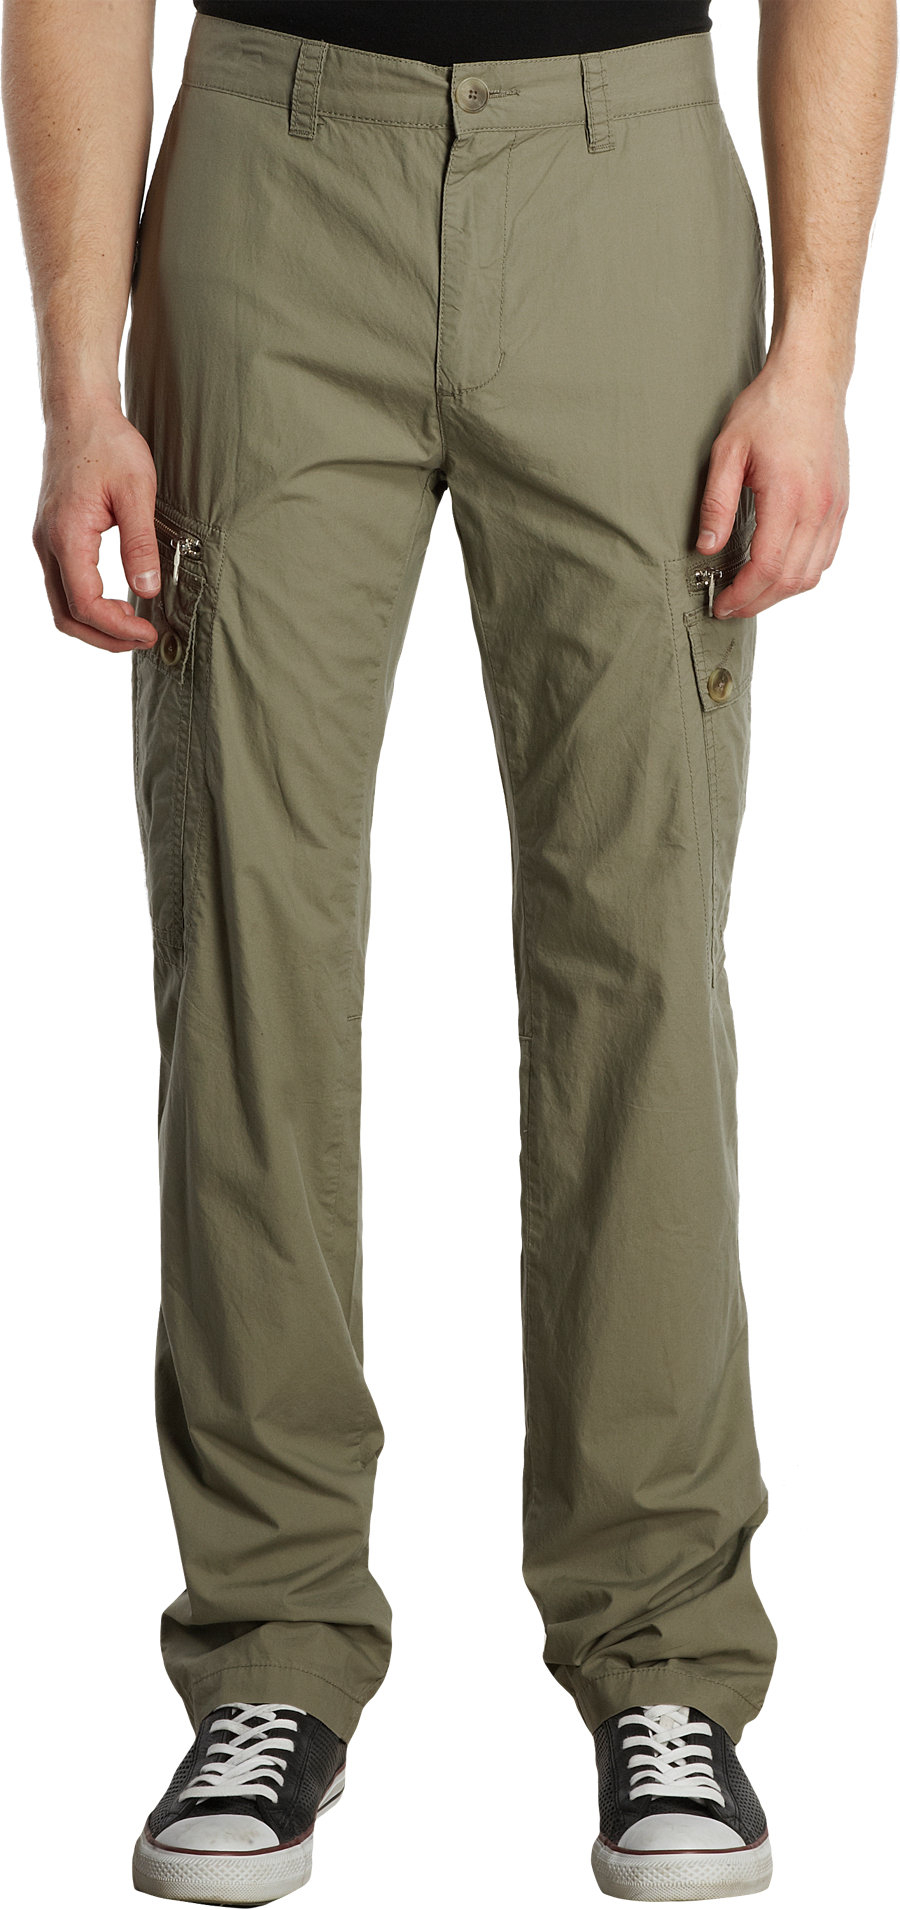 Lyst - Michael Kors Lightweight Cargo Pants in Green for Men